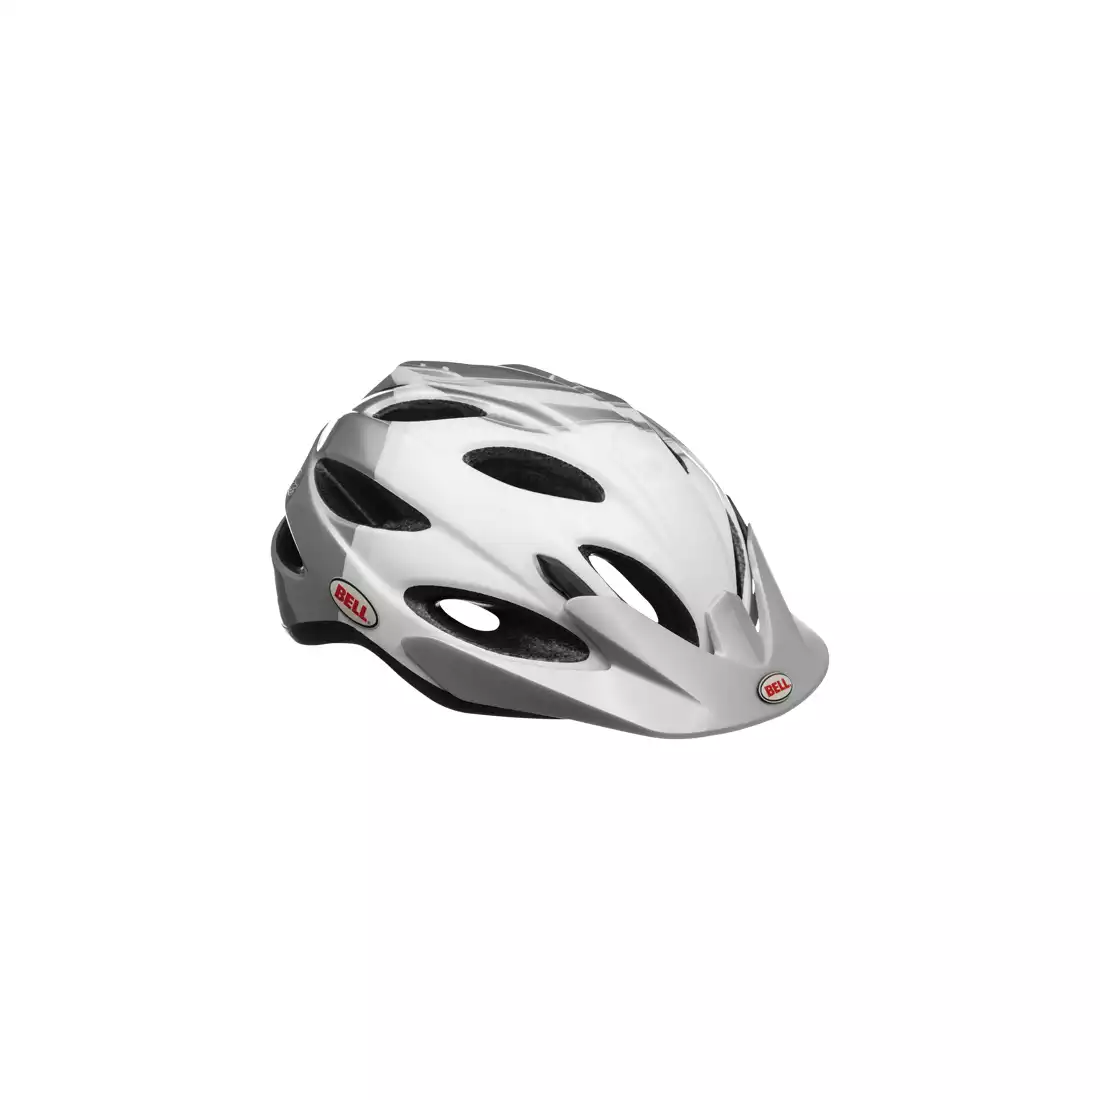 BELL STRUT damski kask rowerowy, biało-srebrny